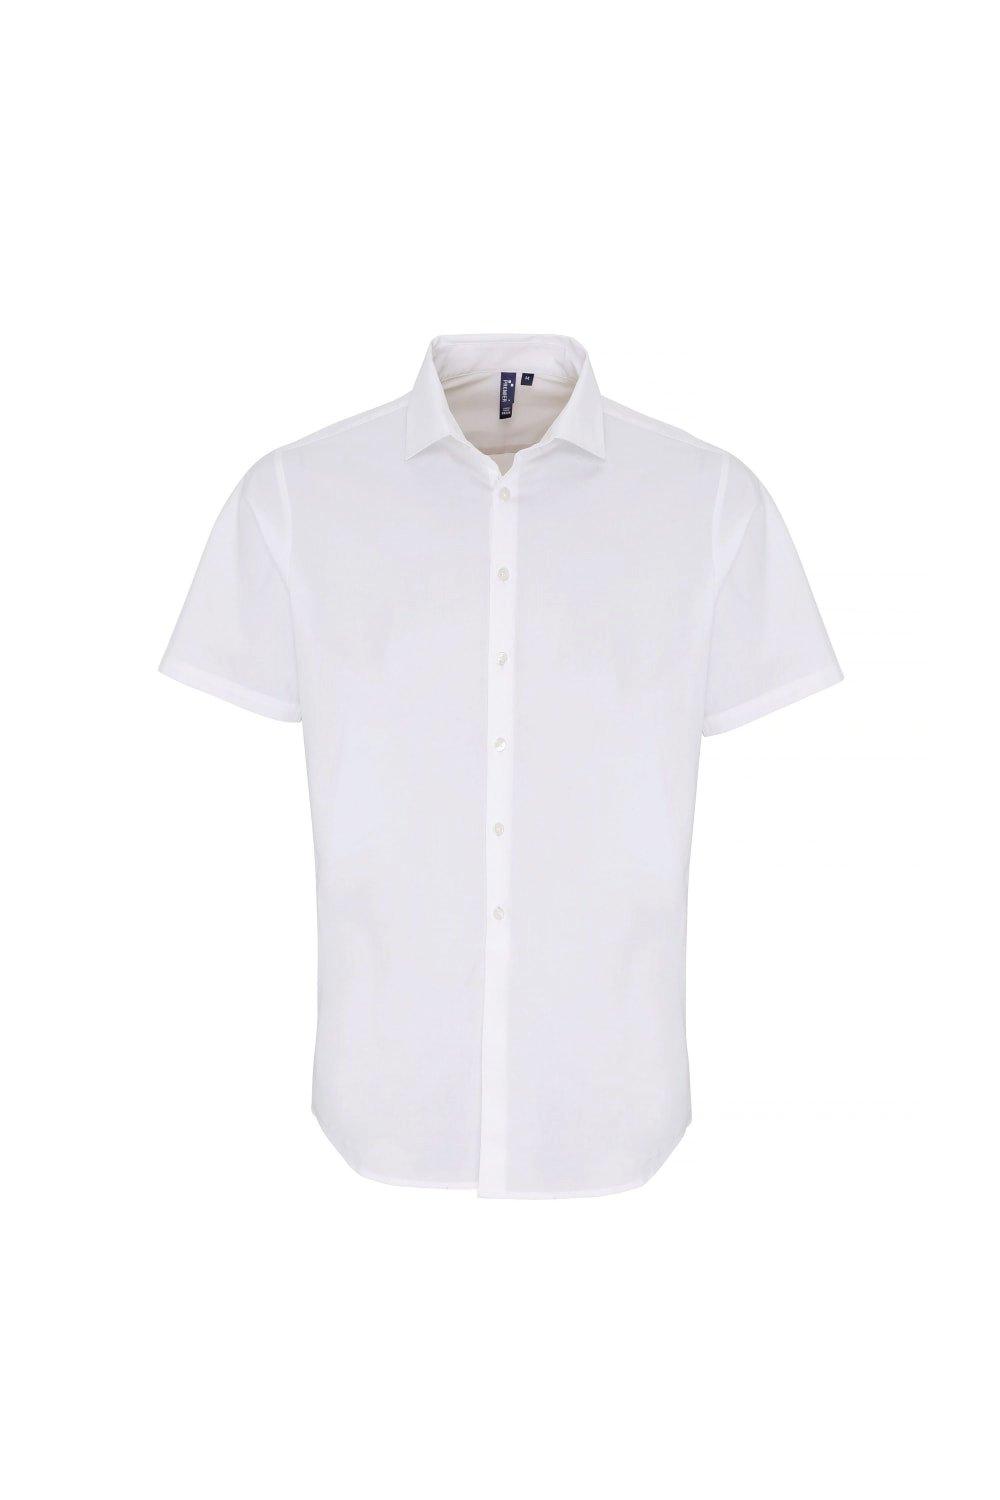 Рубашка из поплина стрейч с короткими рукавами Premier, белый фото